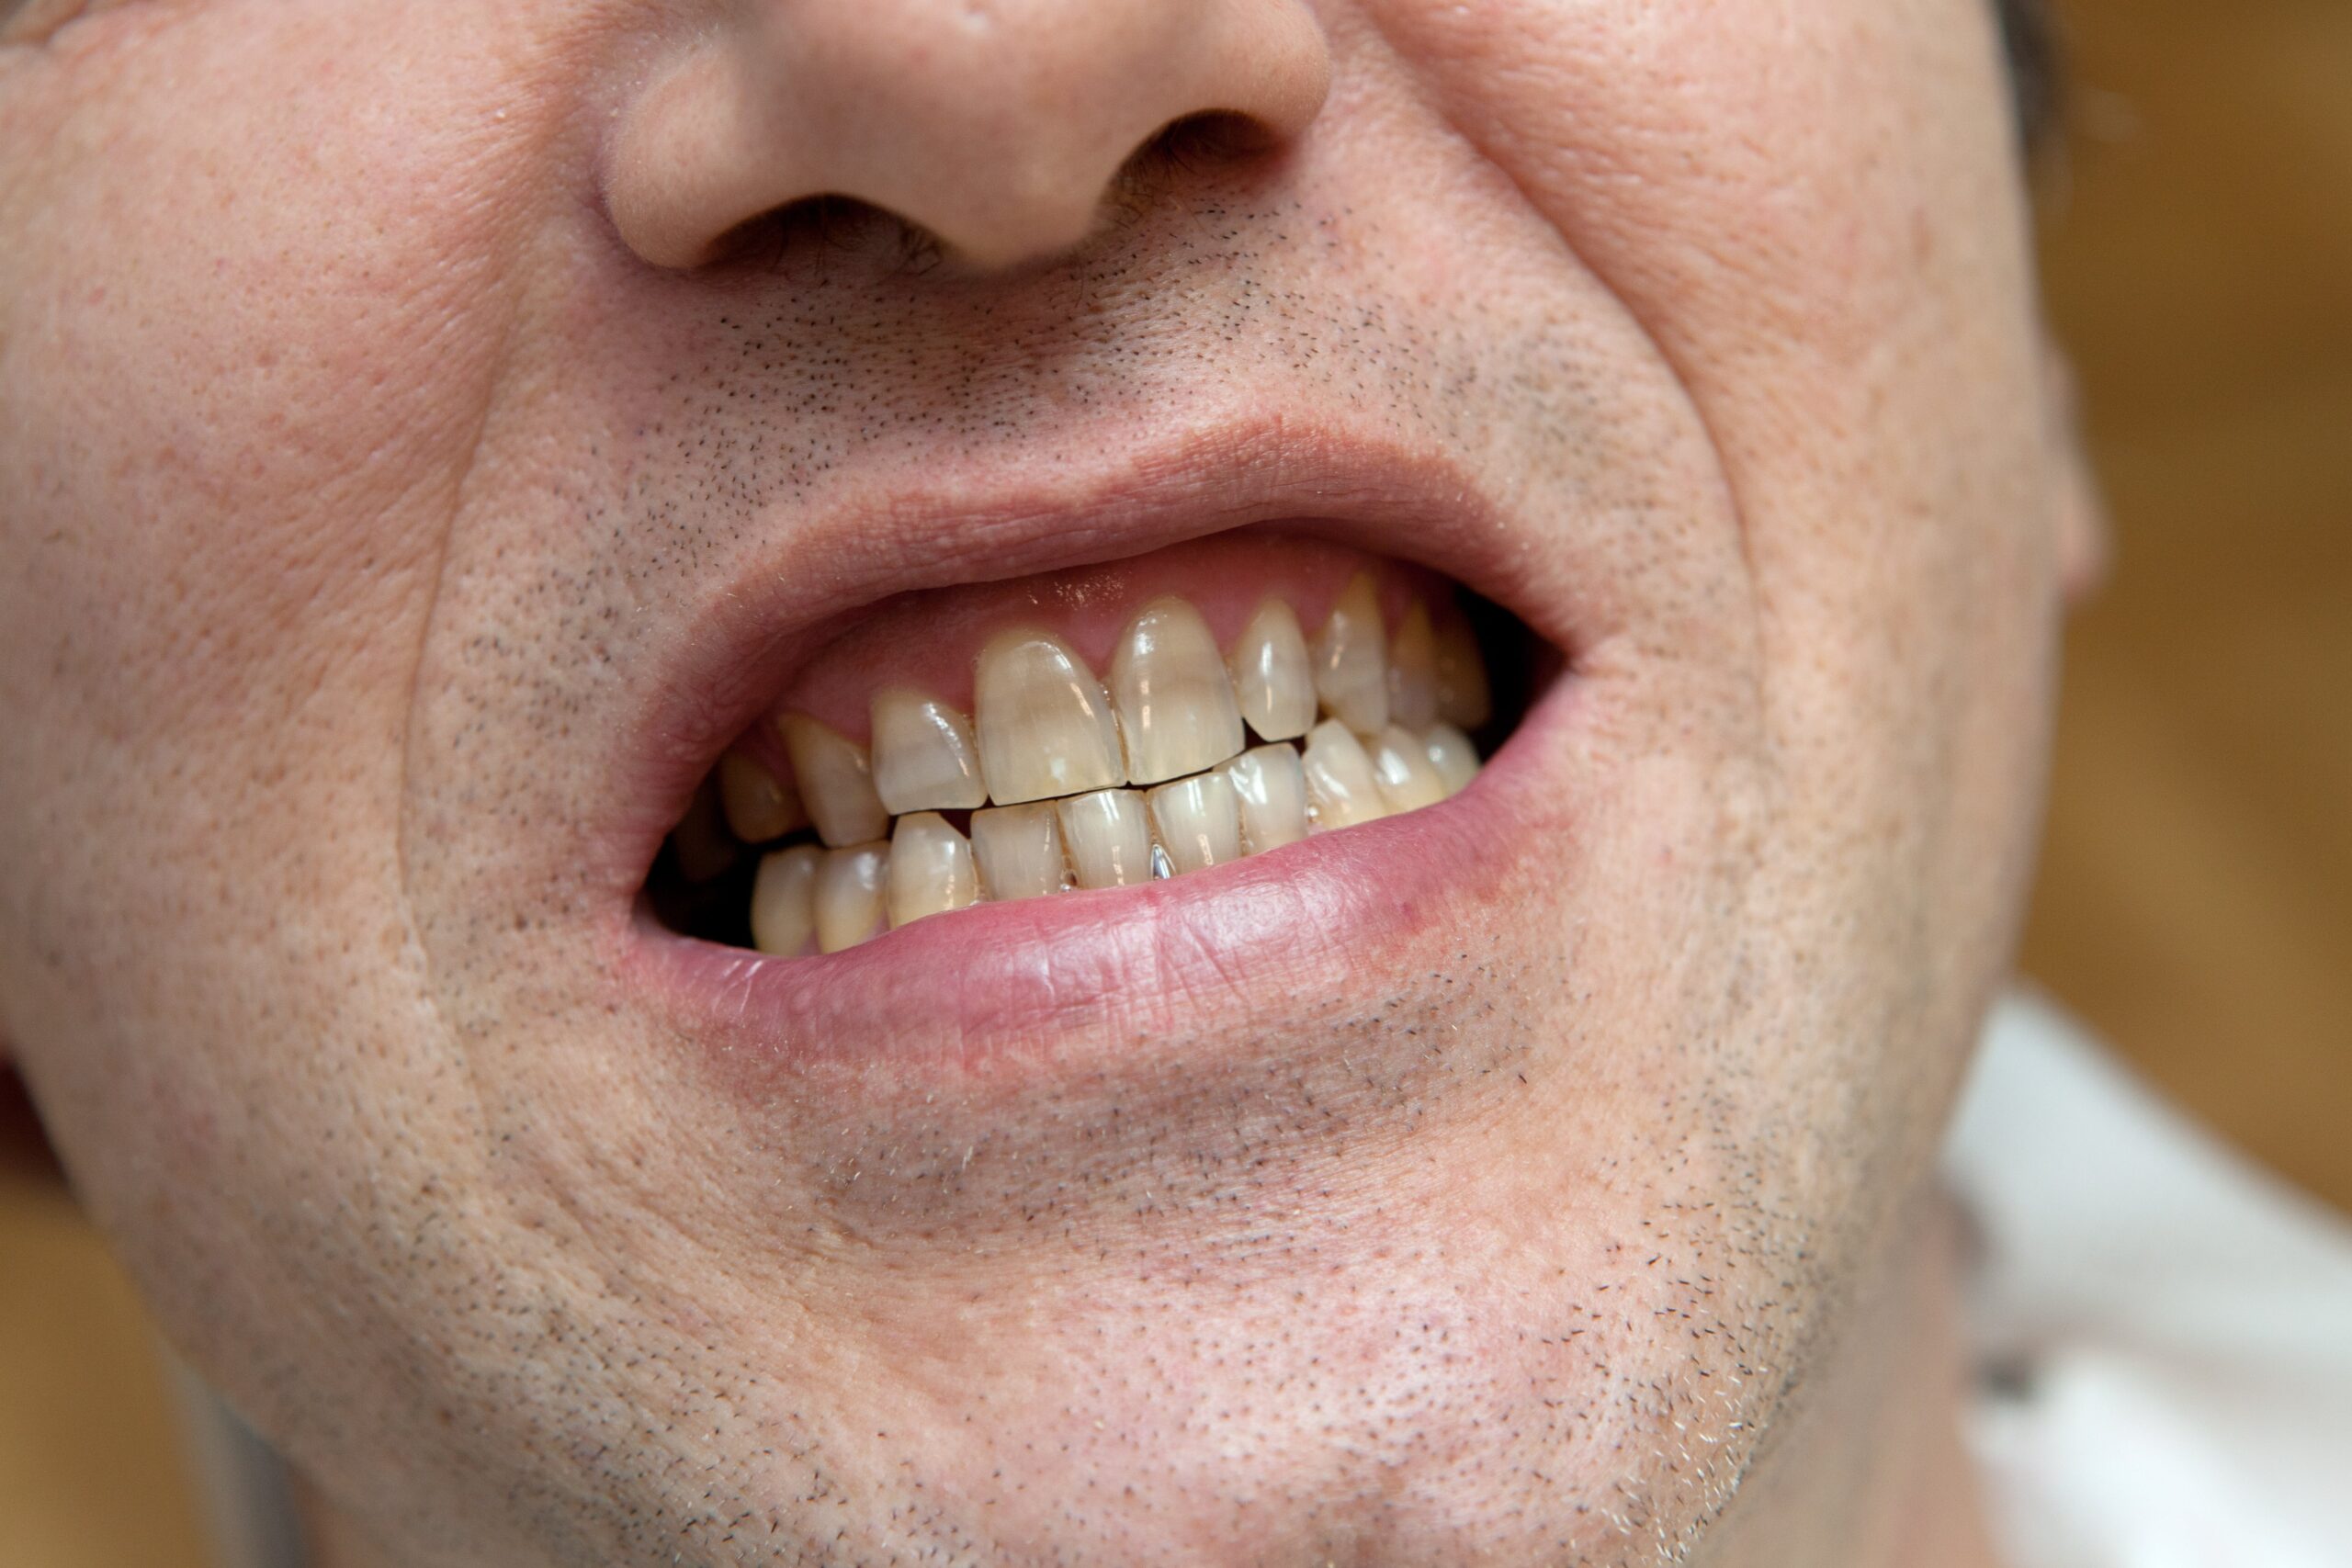 Does Teeth whitening damage enamel? - LCCD